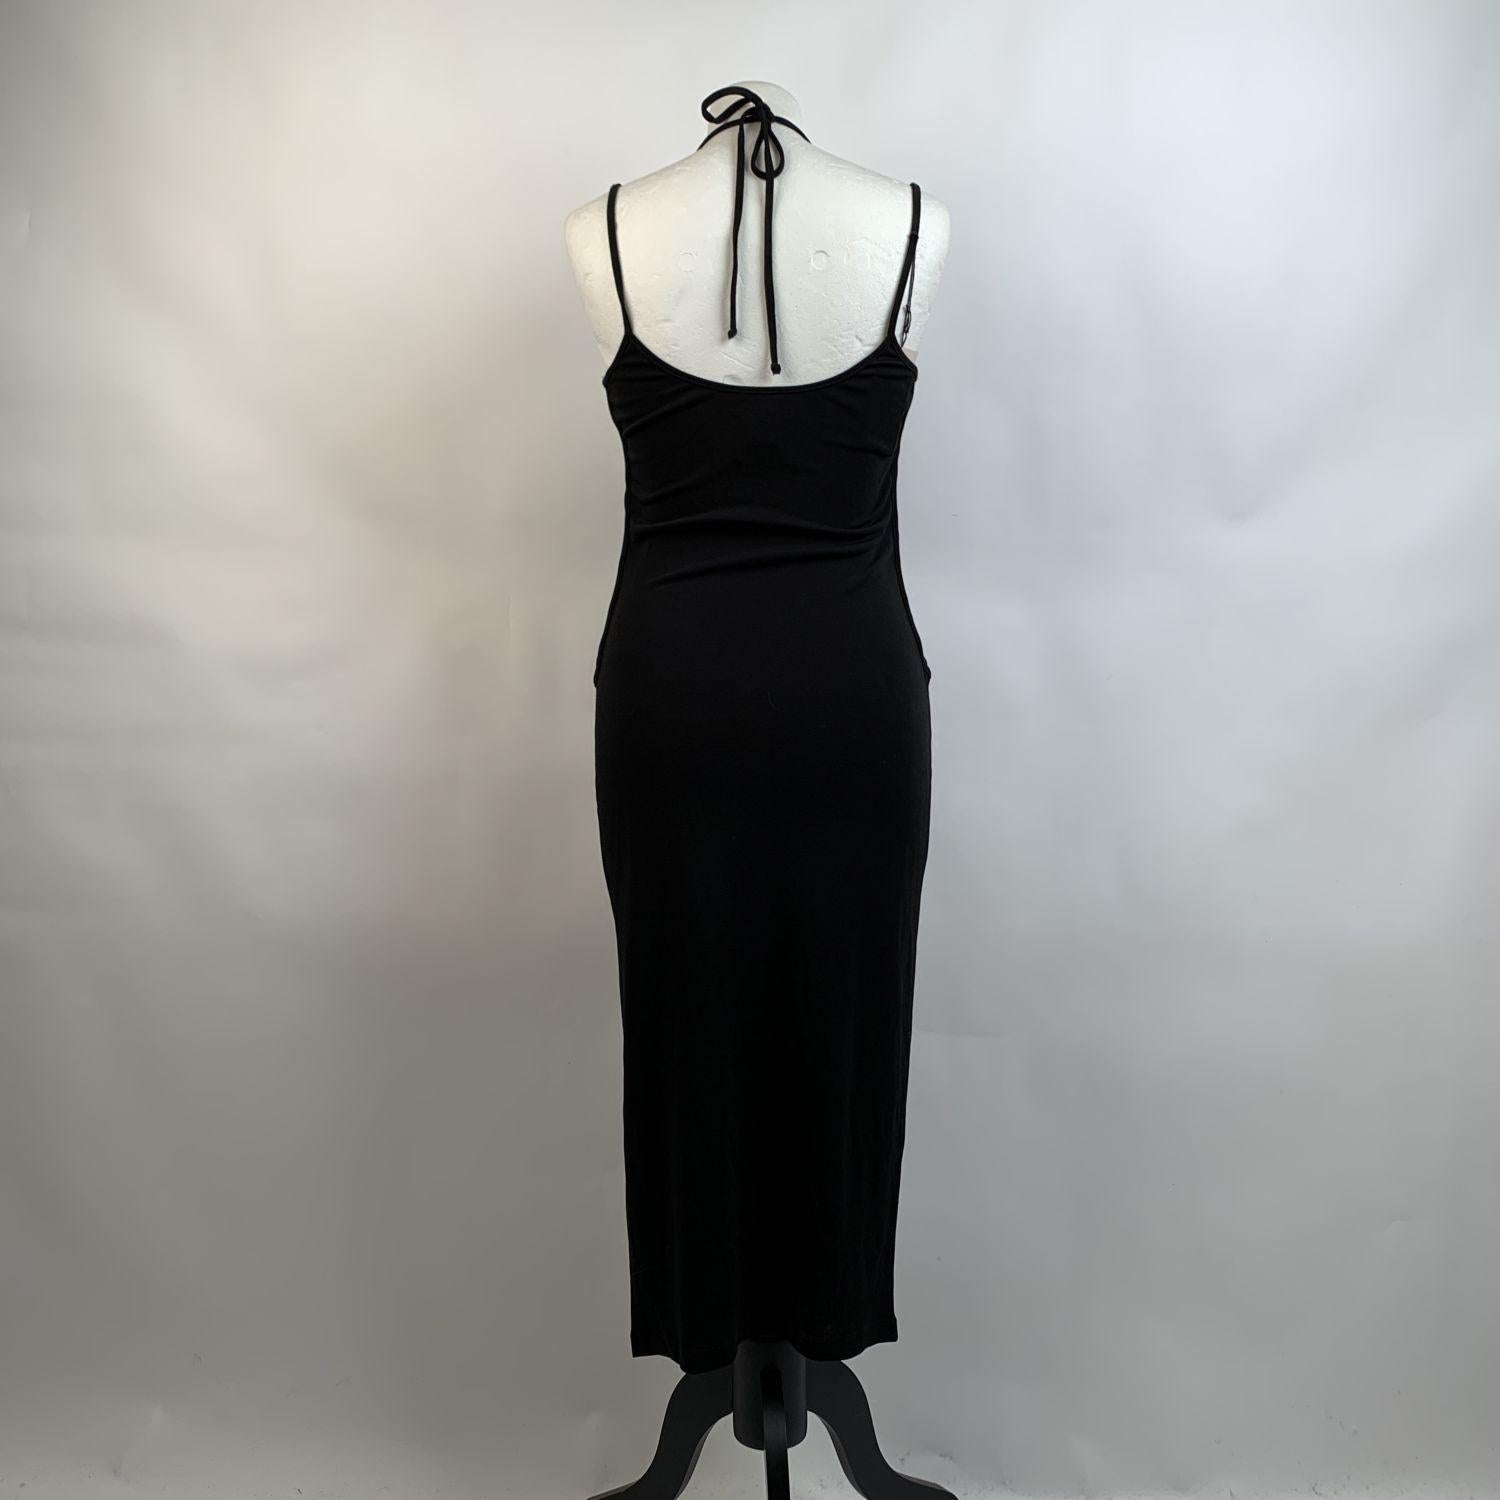 Women's D&G Dolce & Gabbana Black Bodycon Dress with Crisscross Detail Size 44